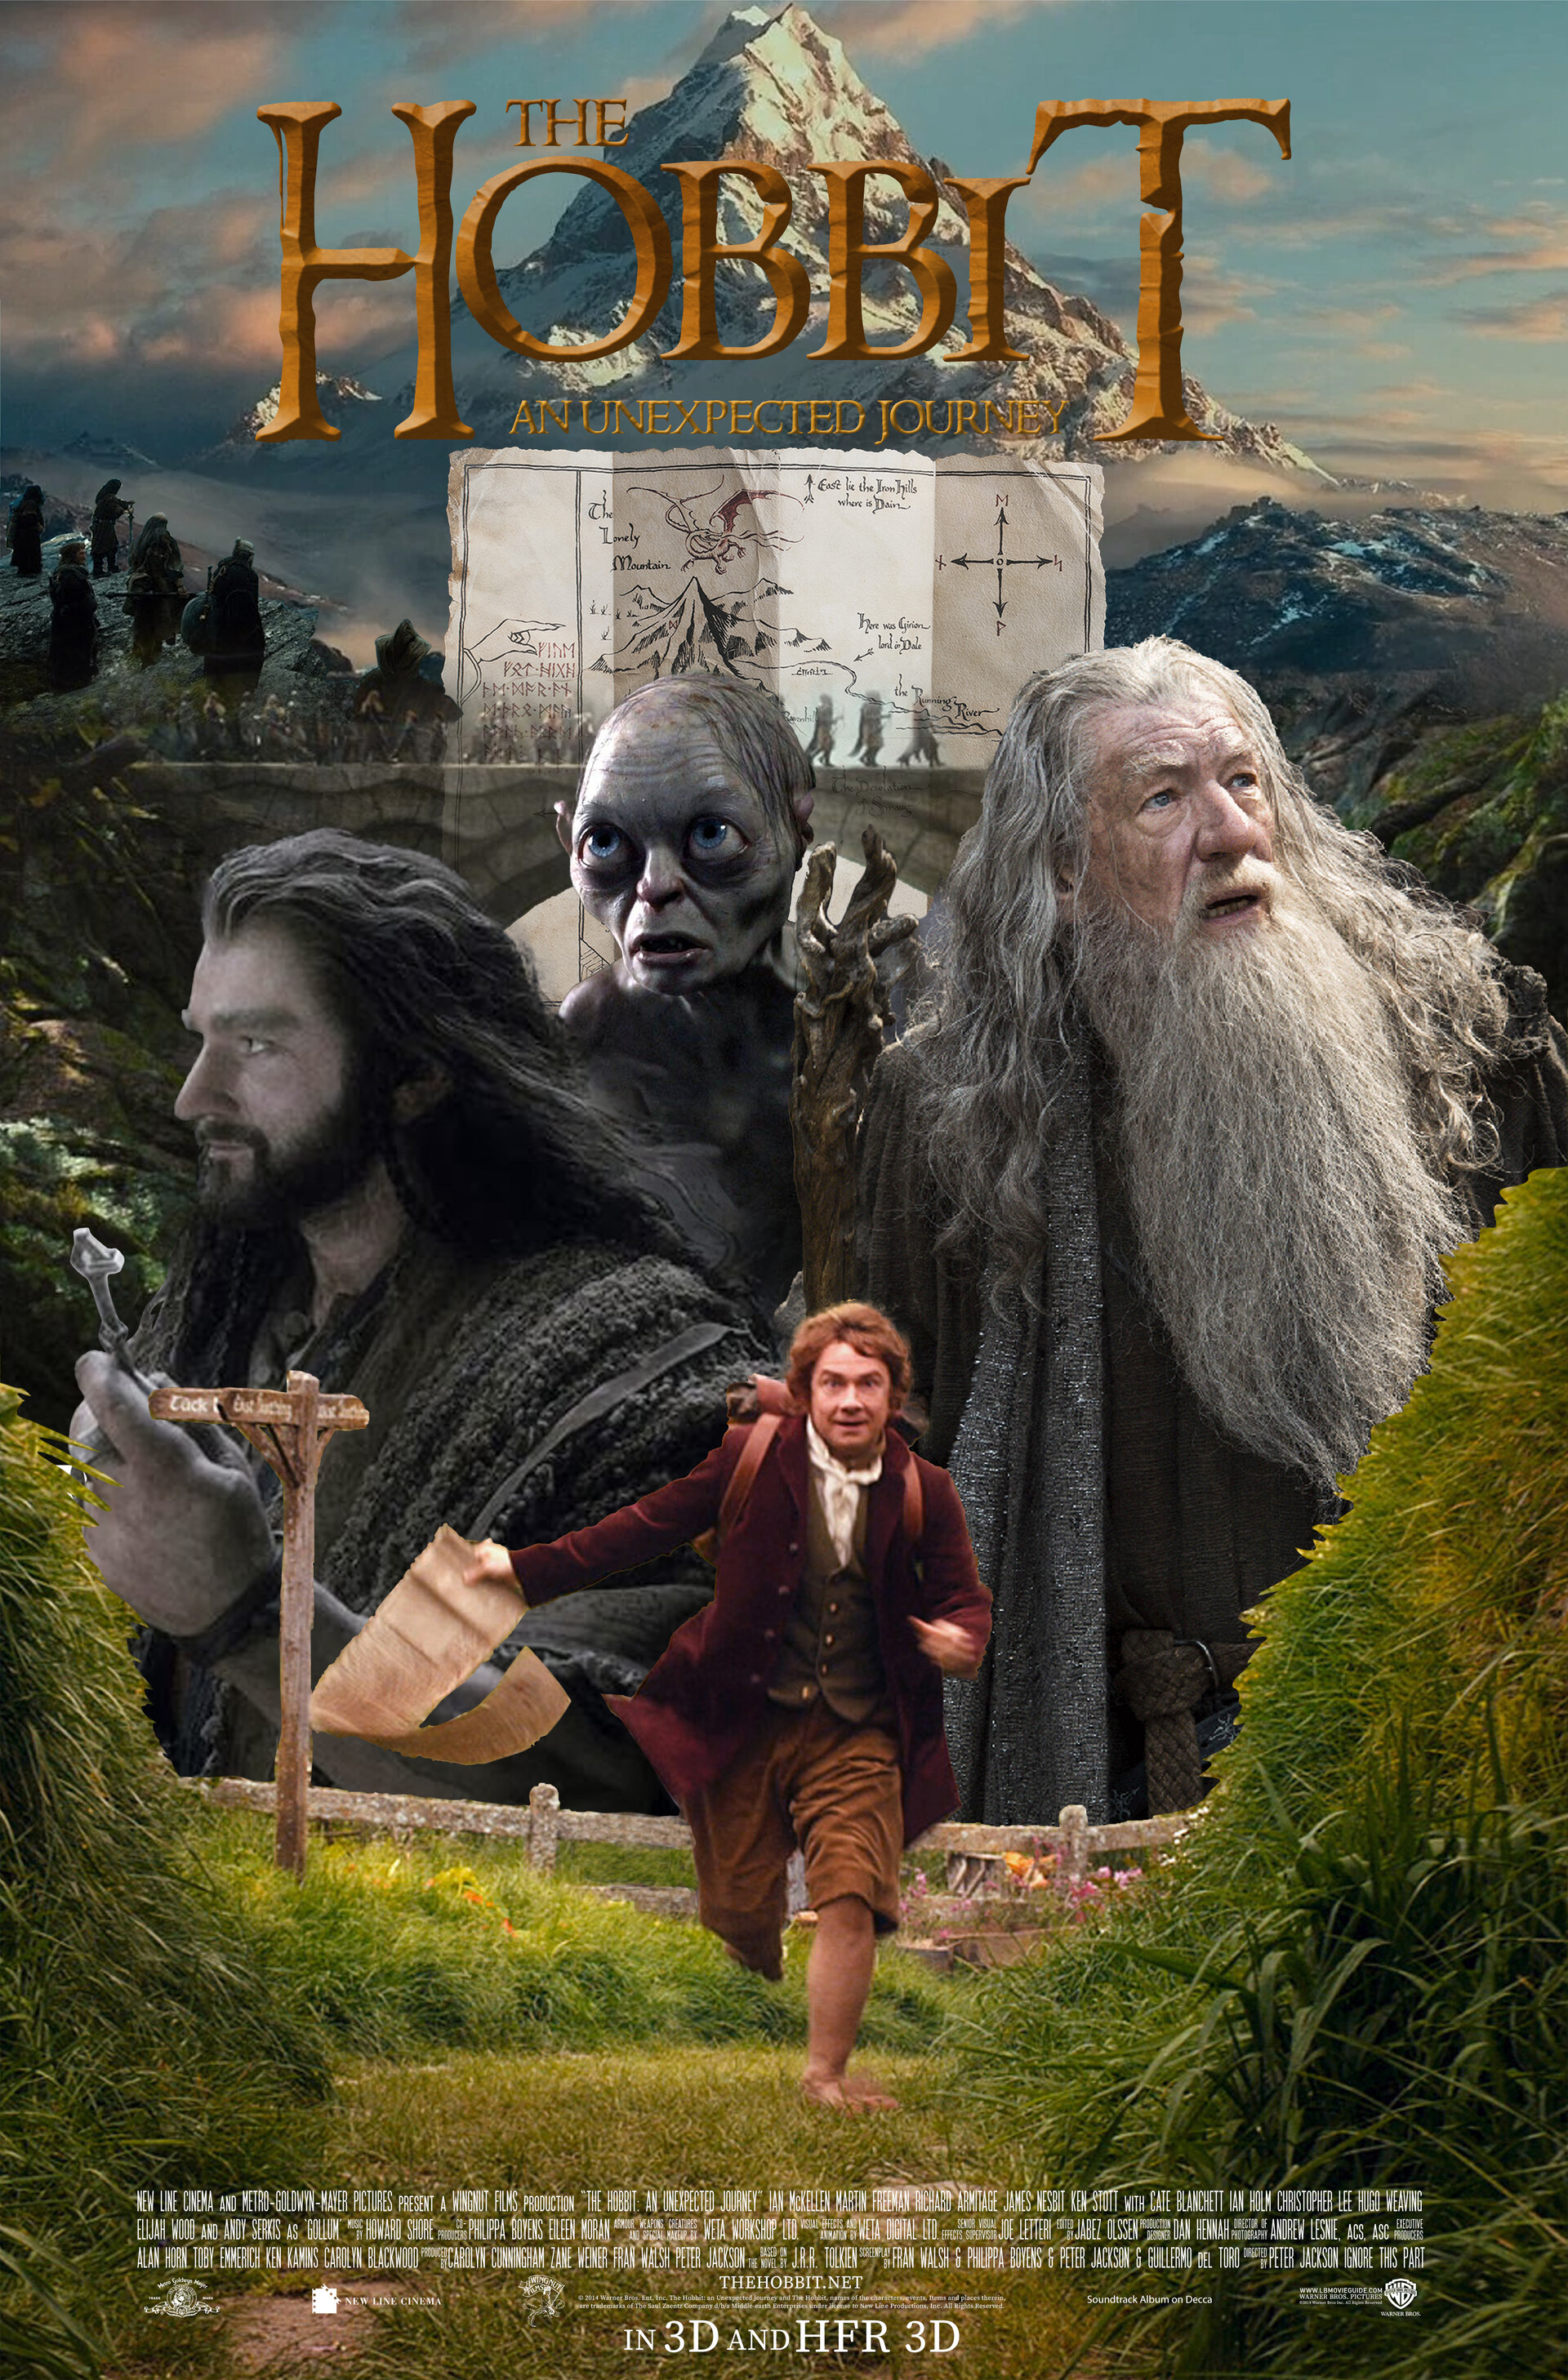 ArtStation - photoshop - custom hobbit movie poster